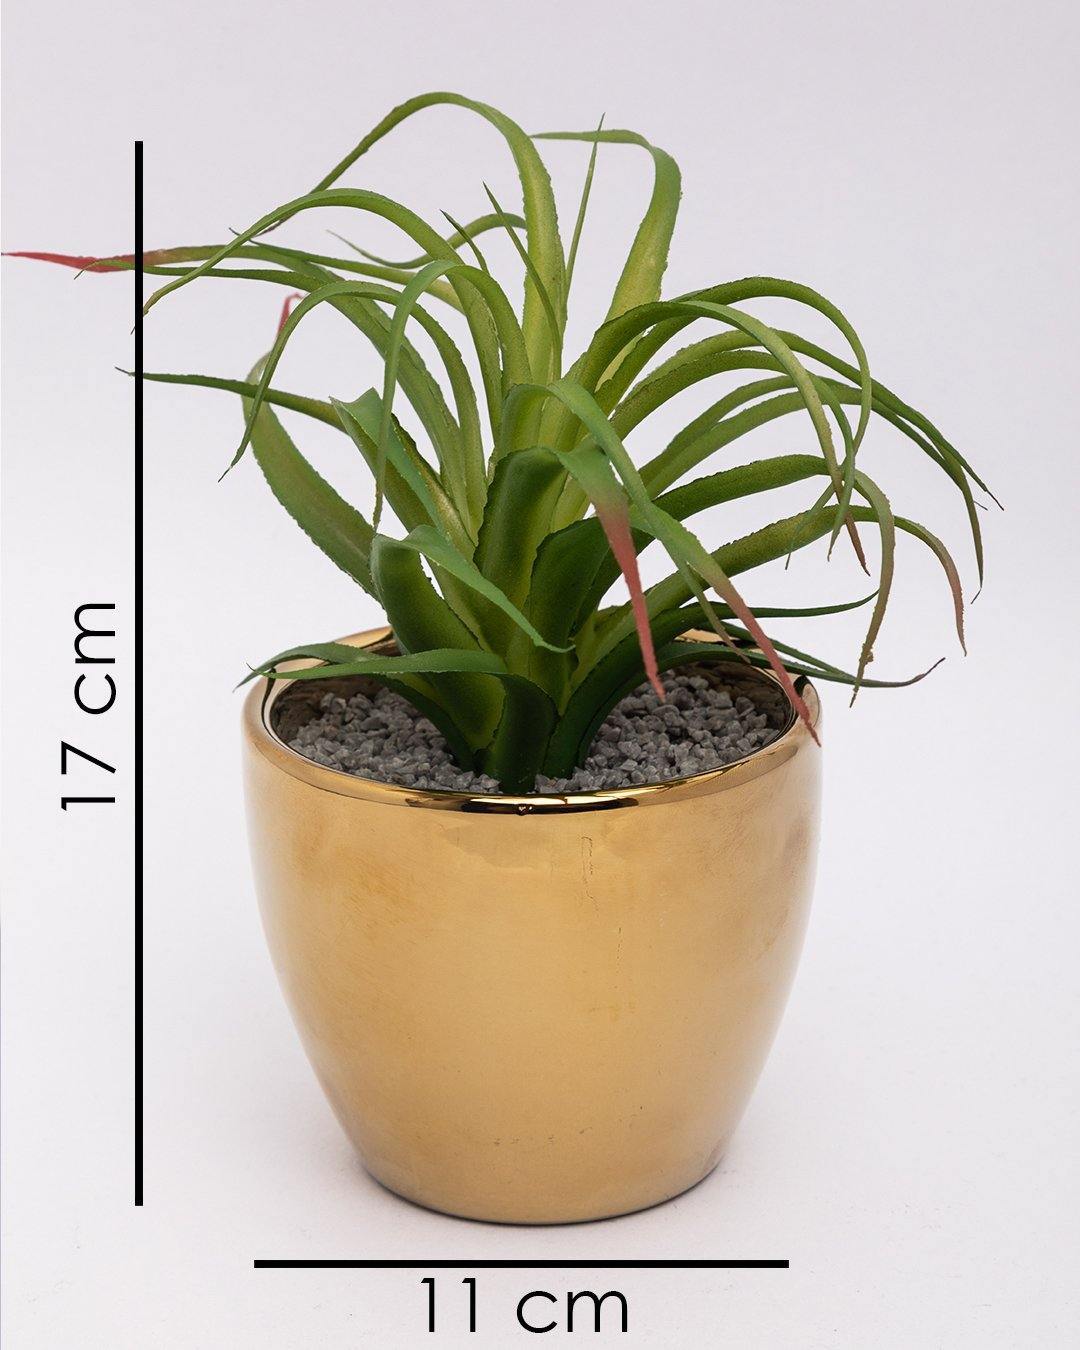 VON CASA Artificial Flower with Pot, Green, Plastic & Ceramic